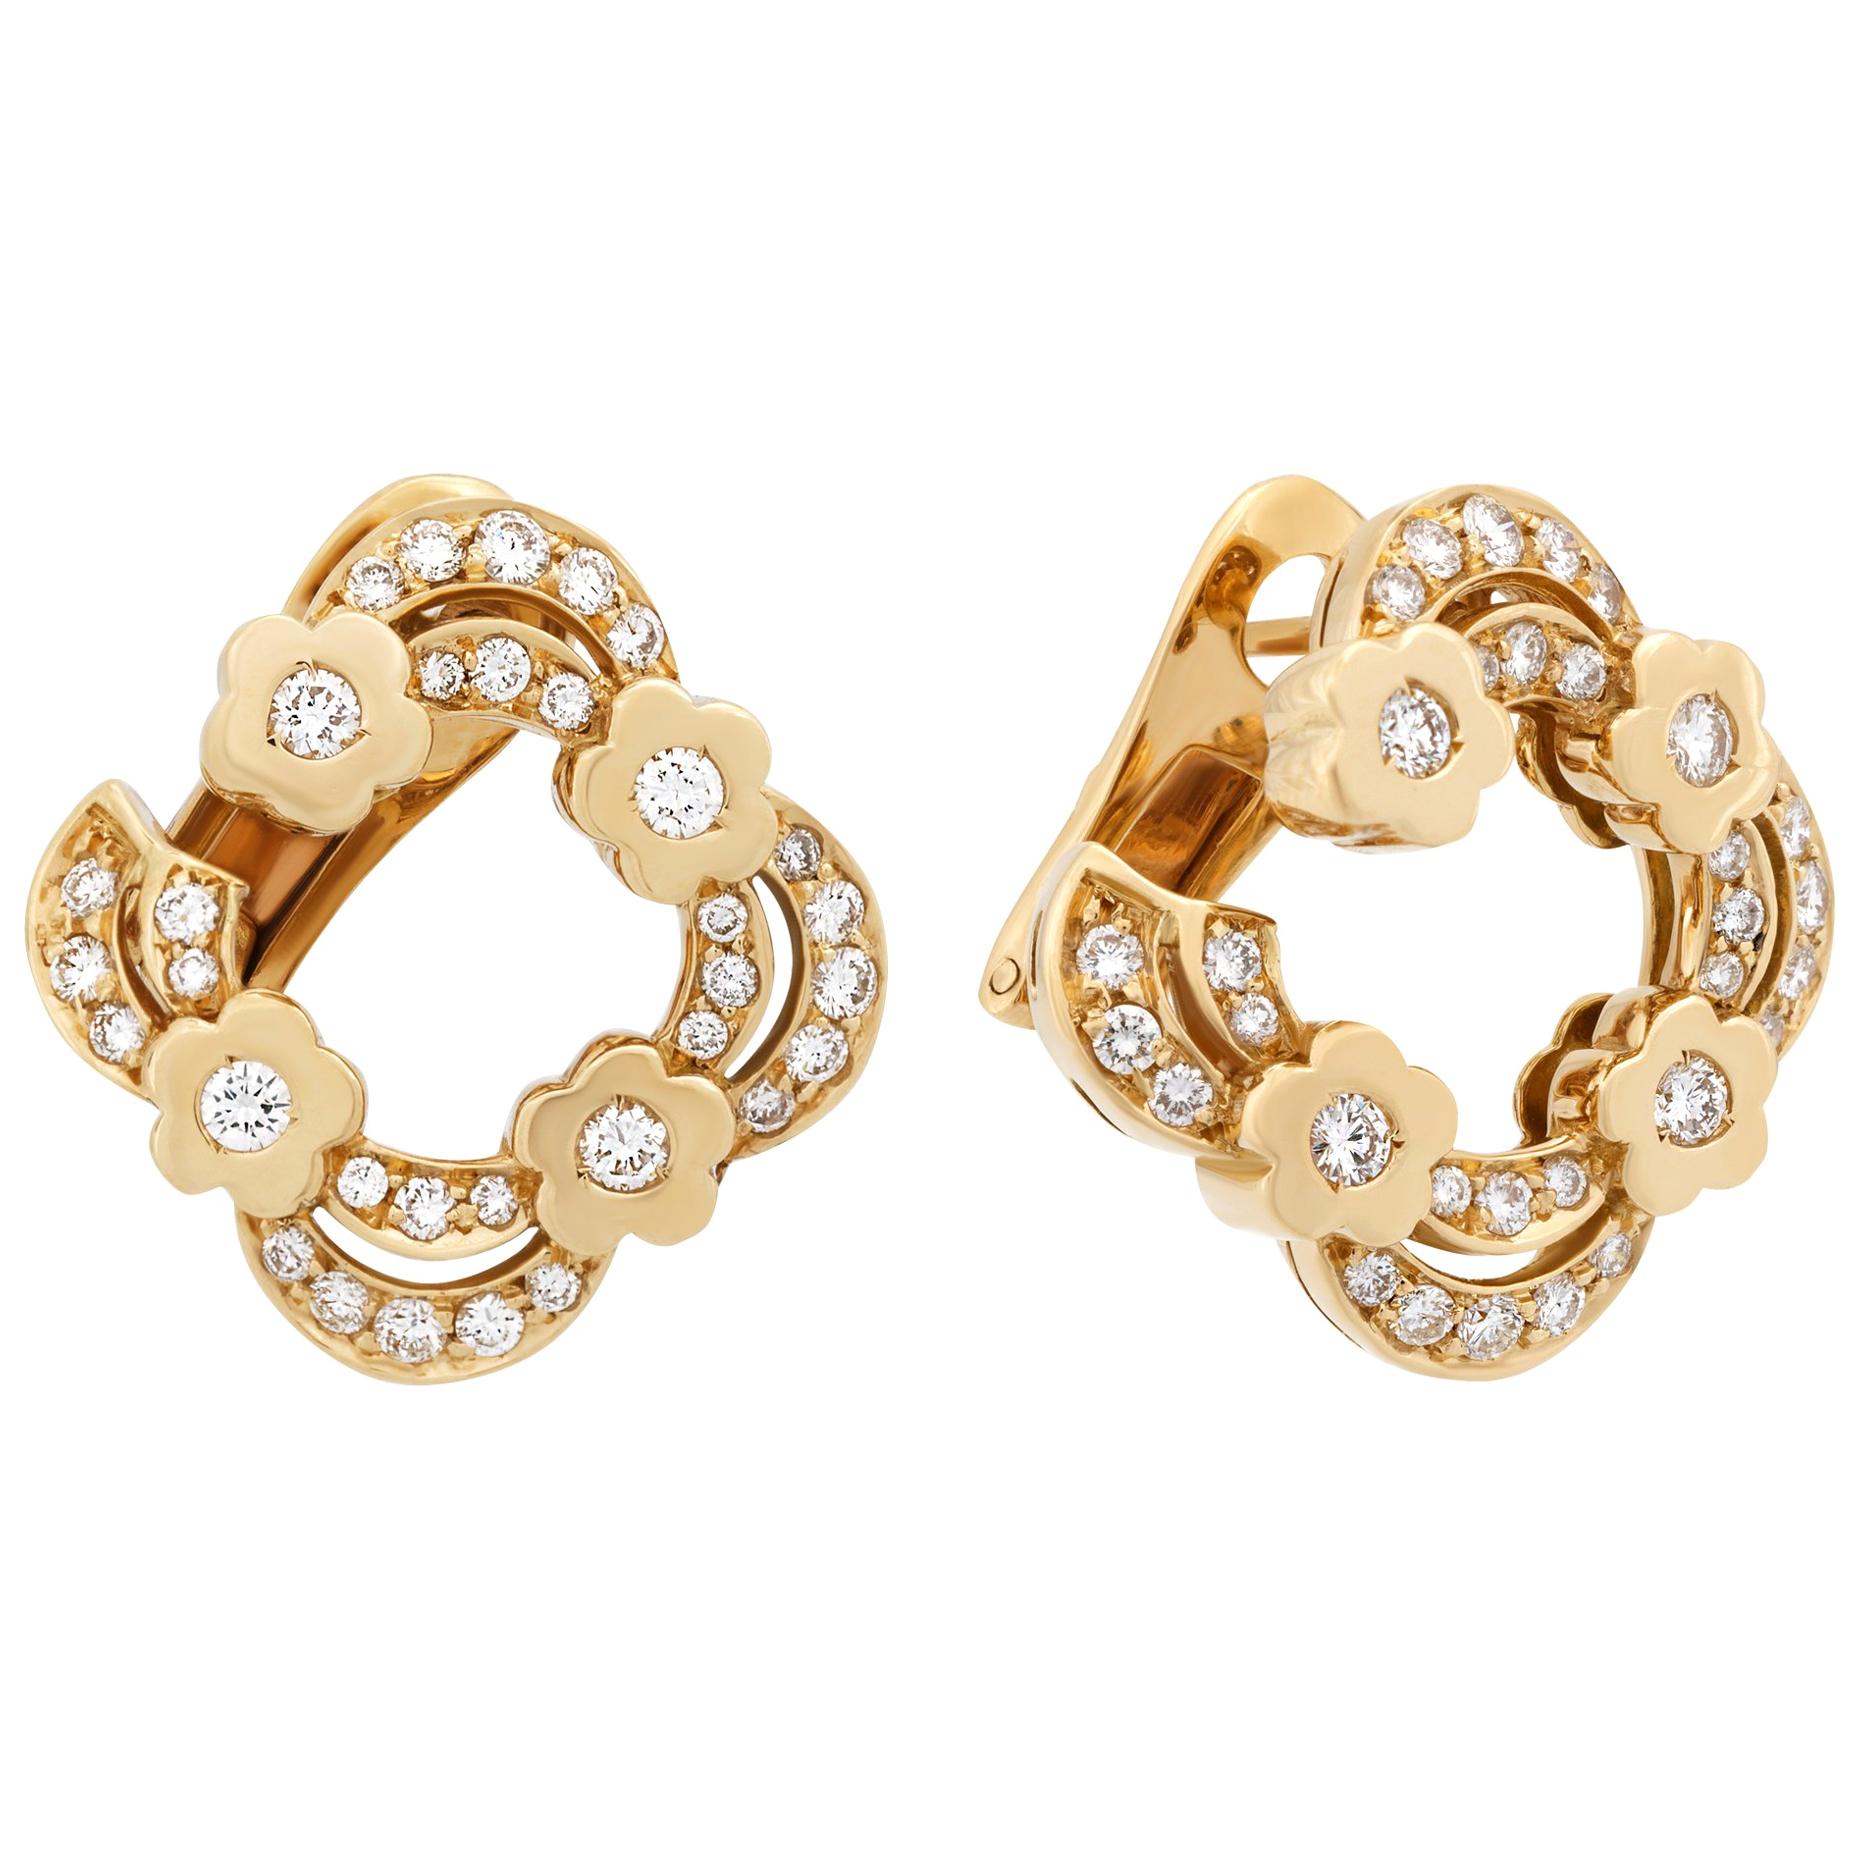 Bvlgari 18 Karat Yellow Gold Diamond Open Flower Earrings